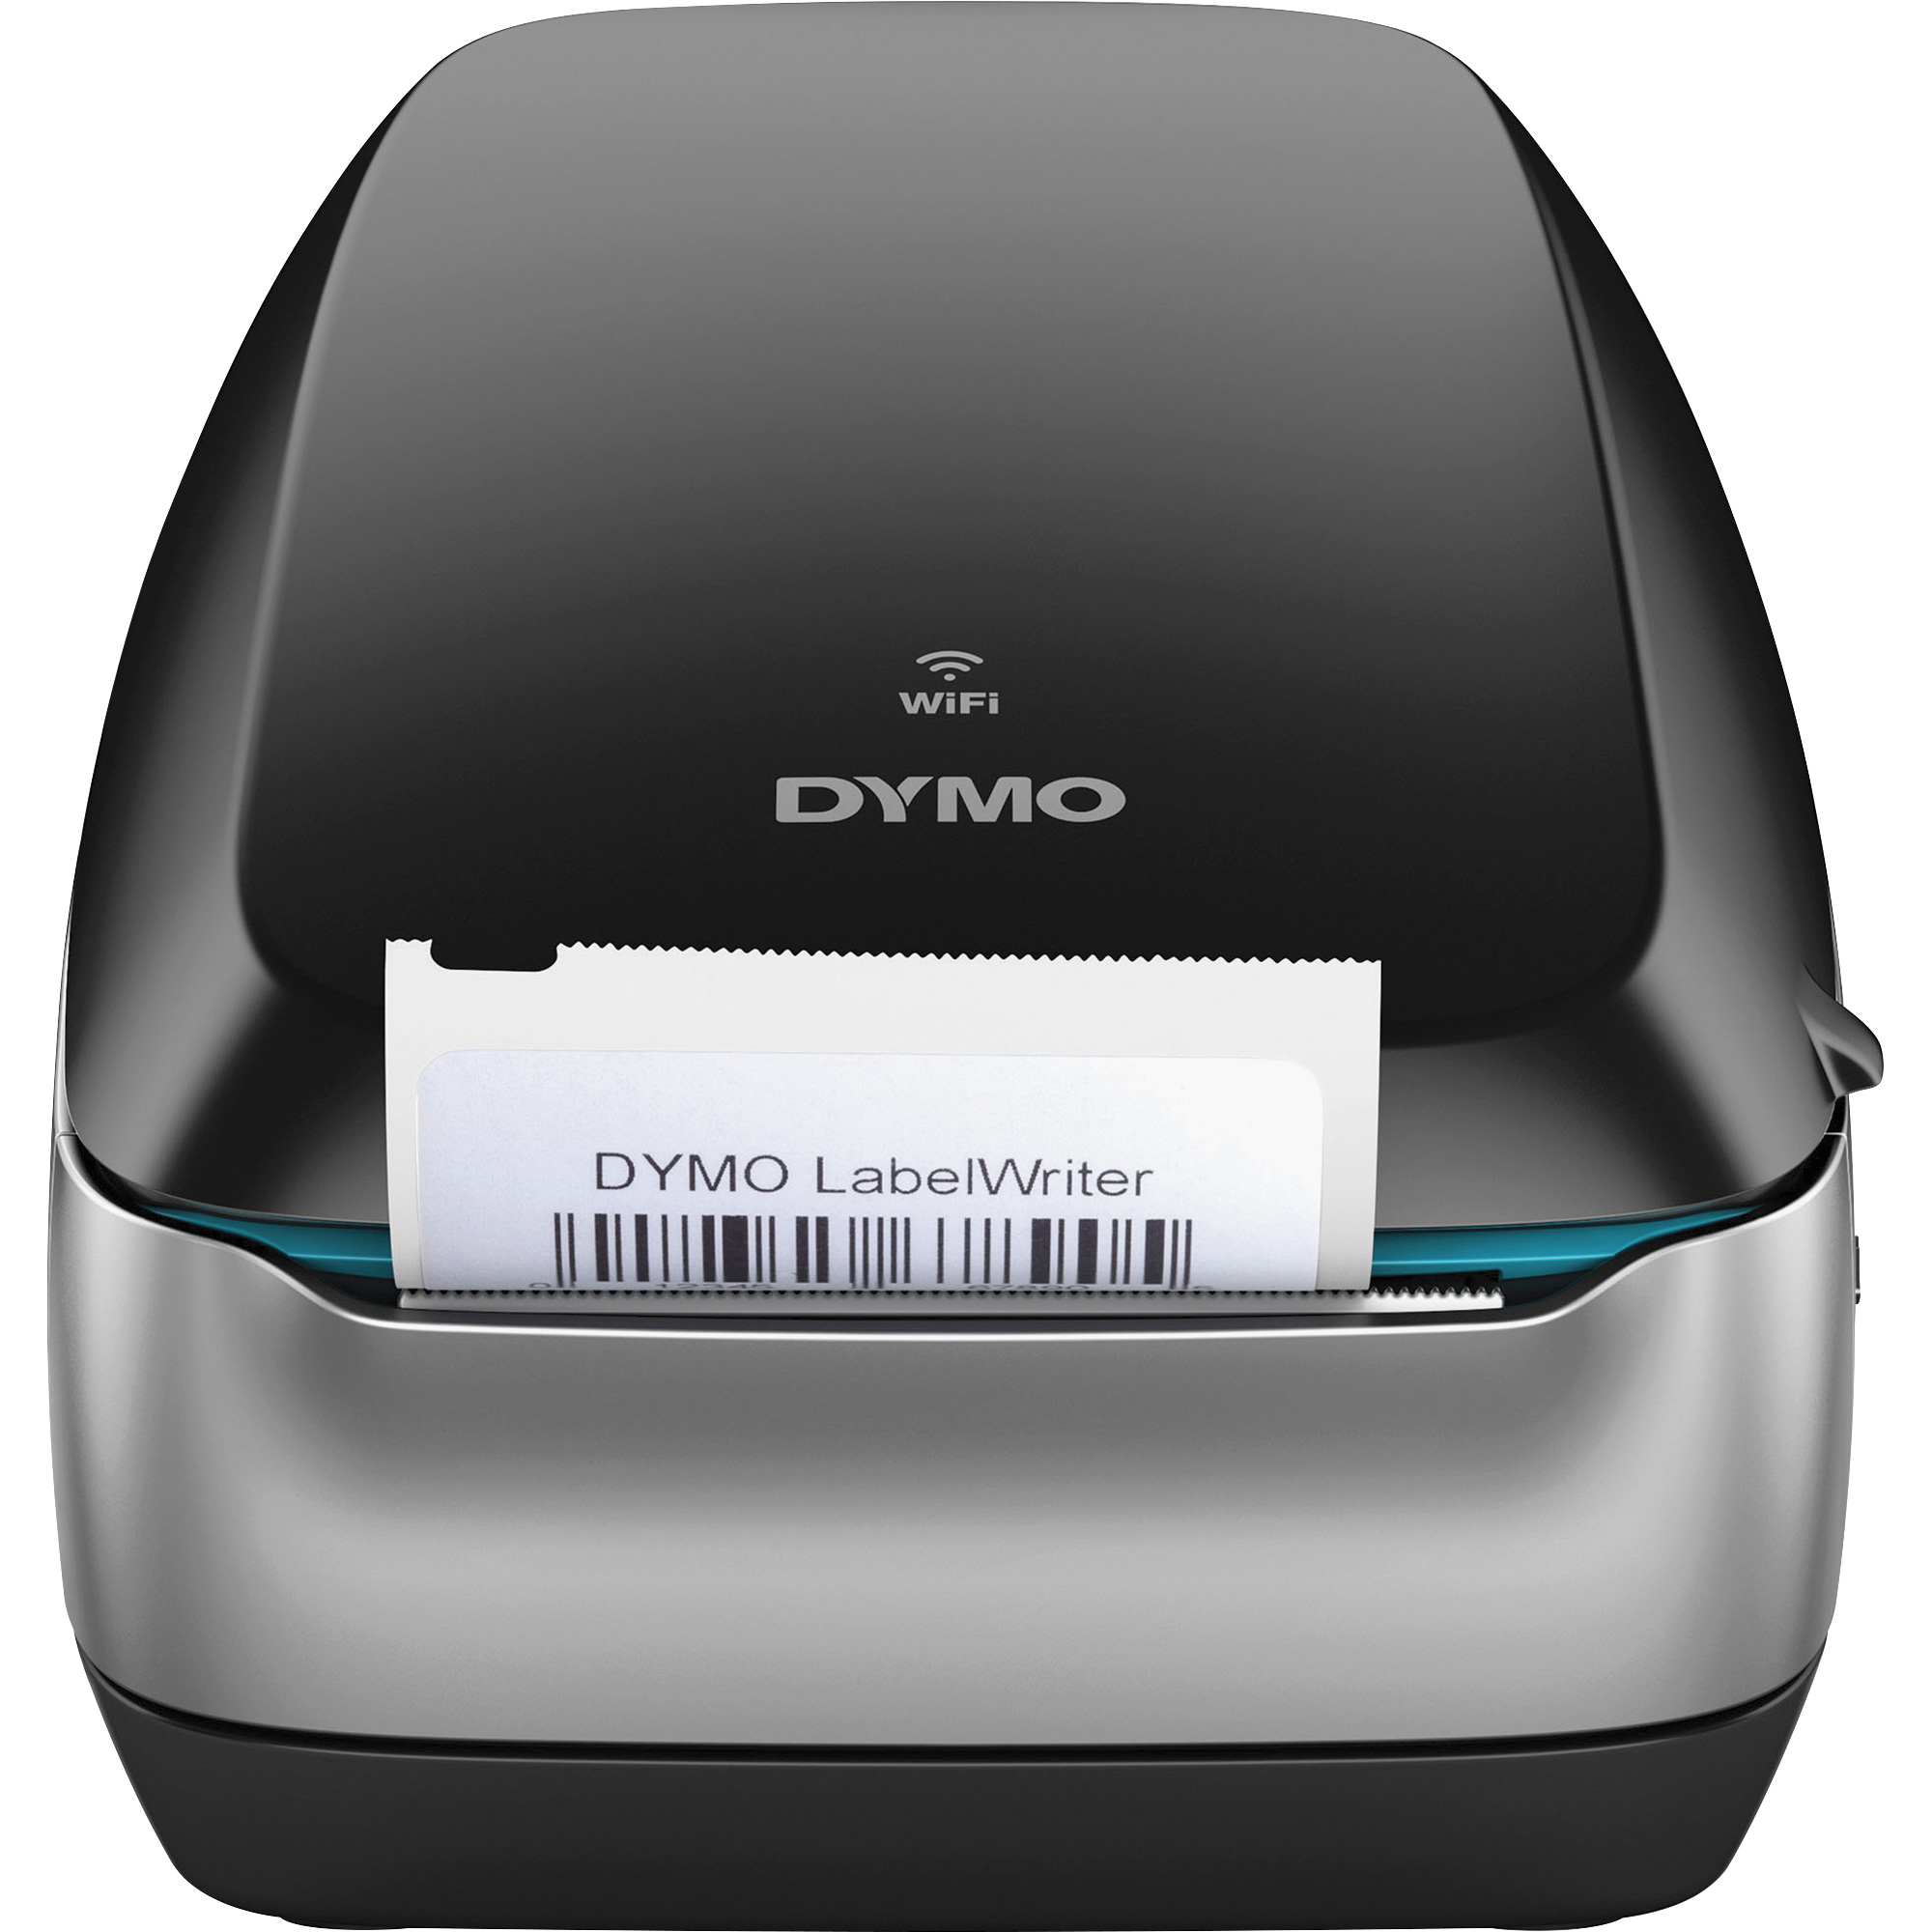 DYMO LabelWriter Wireless Printer 2002150 DYM2002150